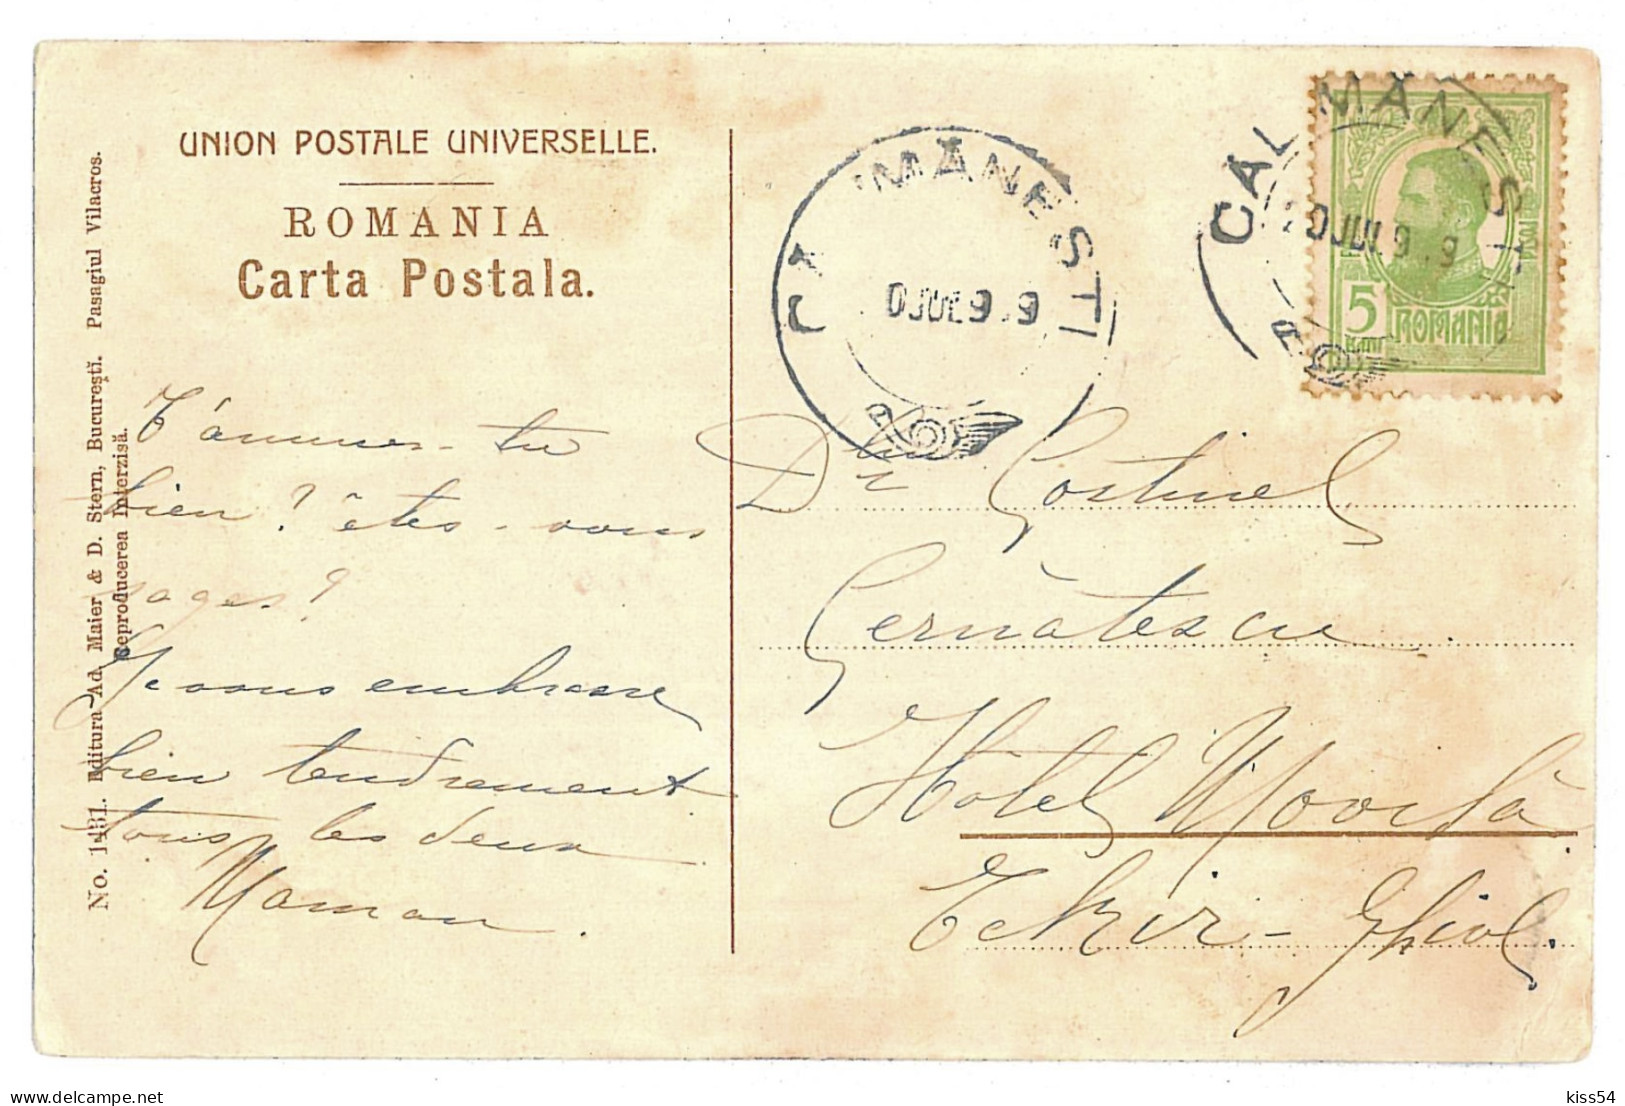 RO 999 - 10590 CALIMANESTI, Valcea, Romania, Railway, Table Traian - Old Postcard - Used - 1909 - Romania